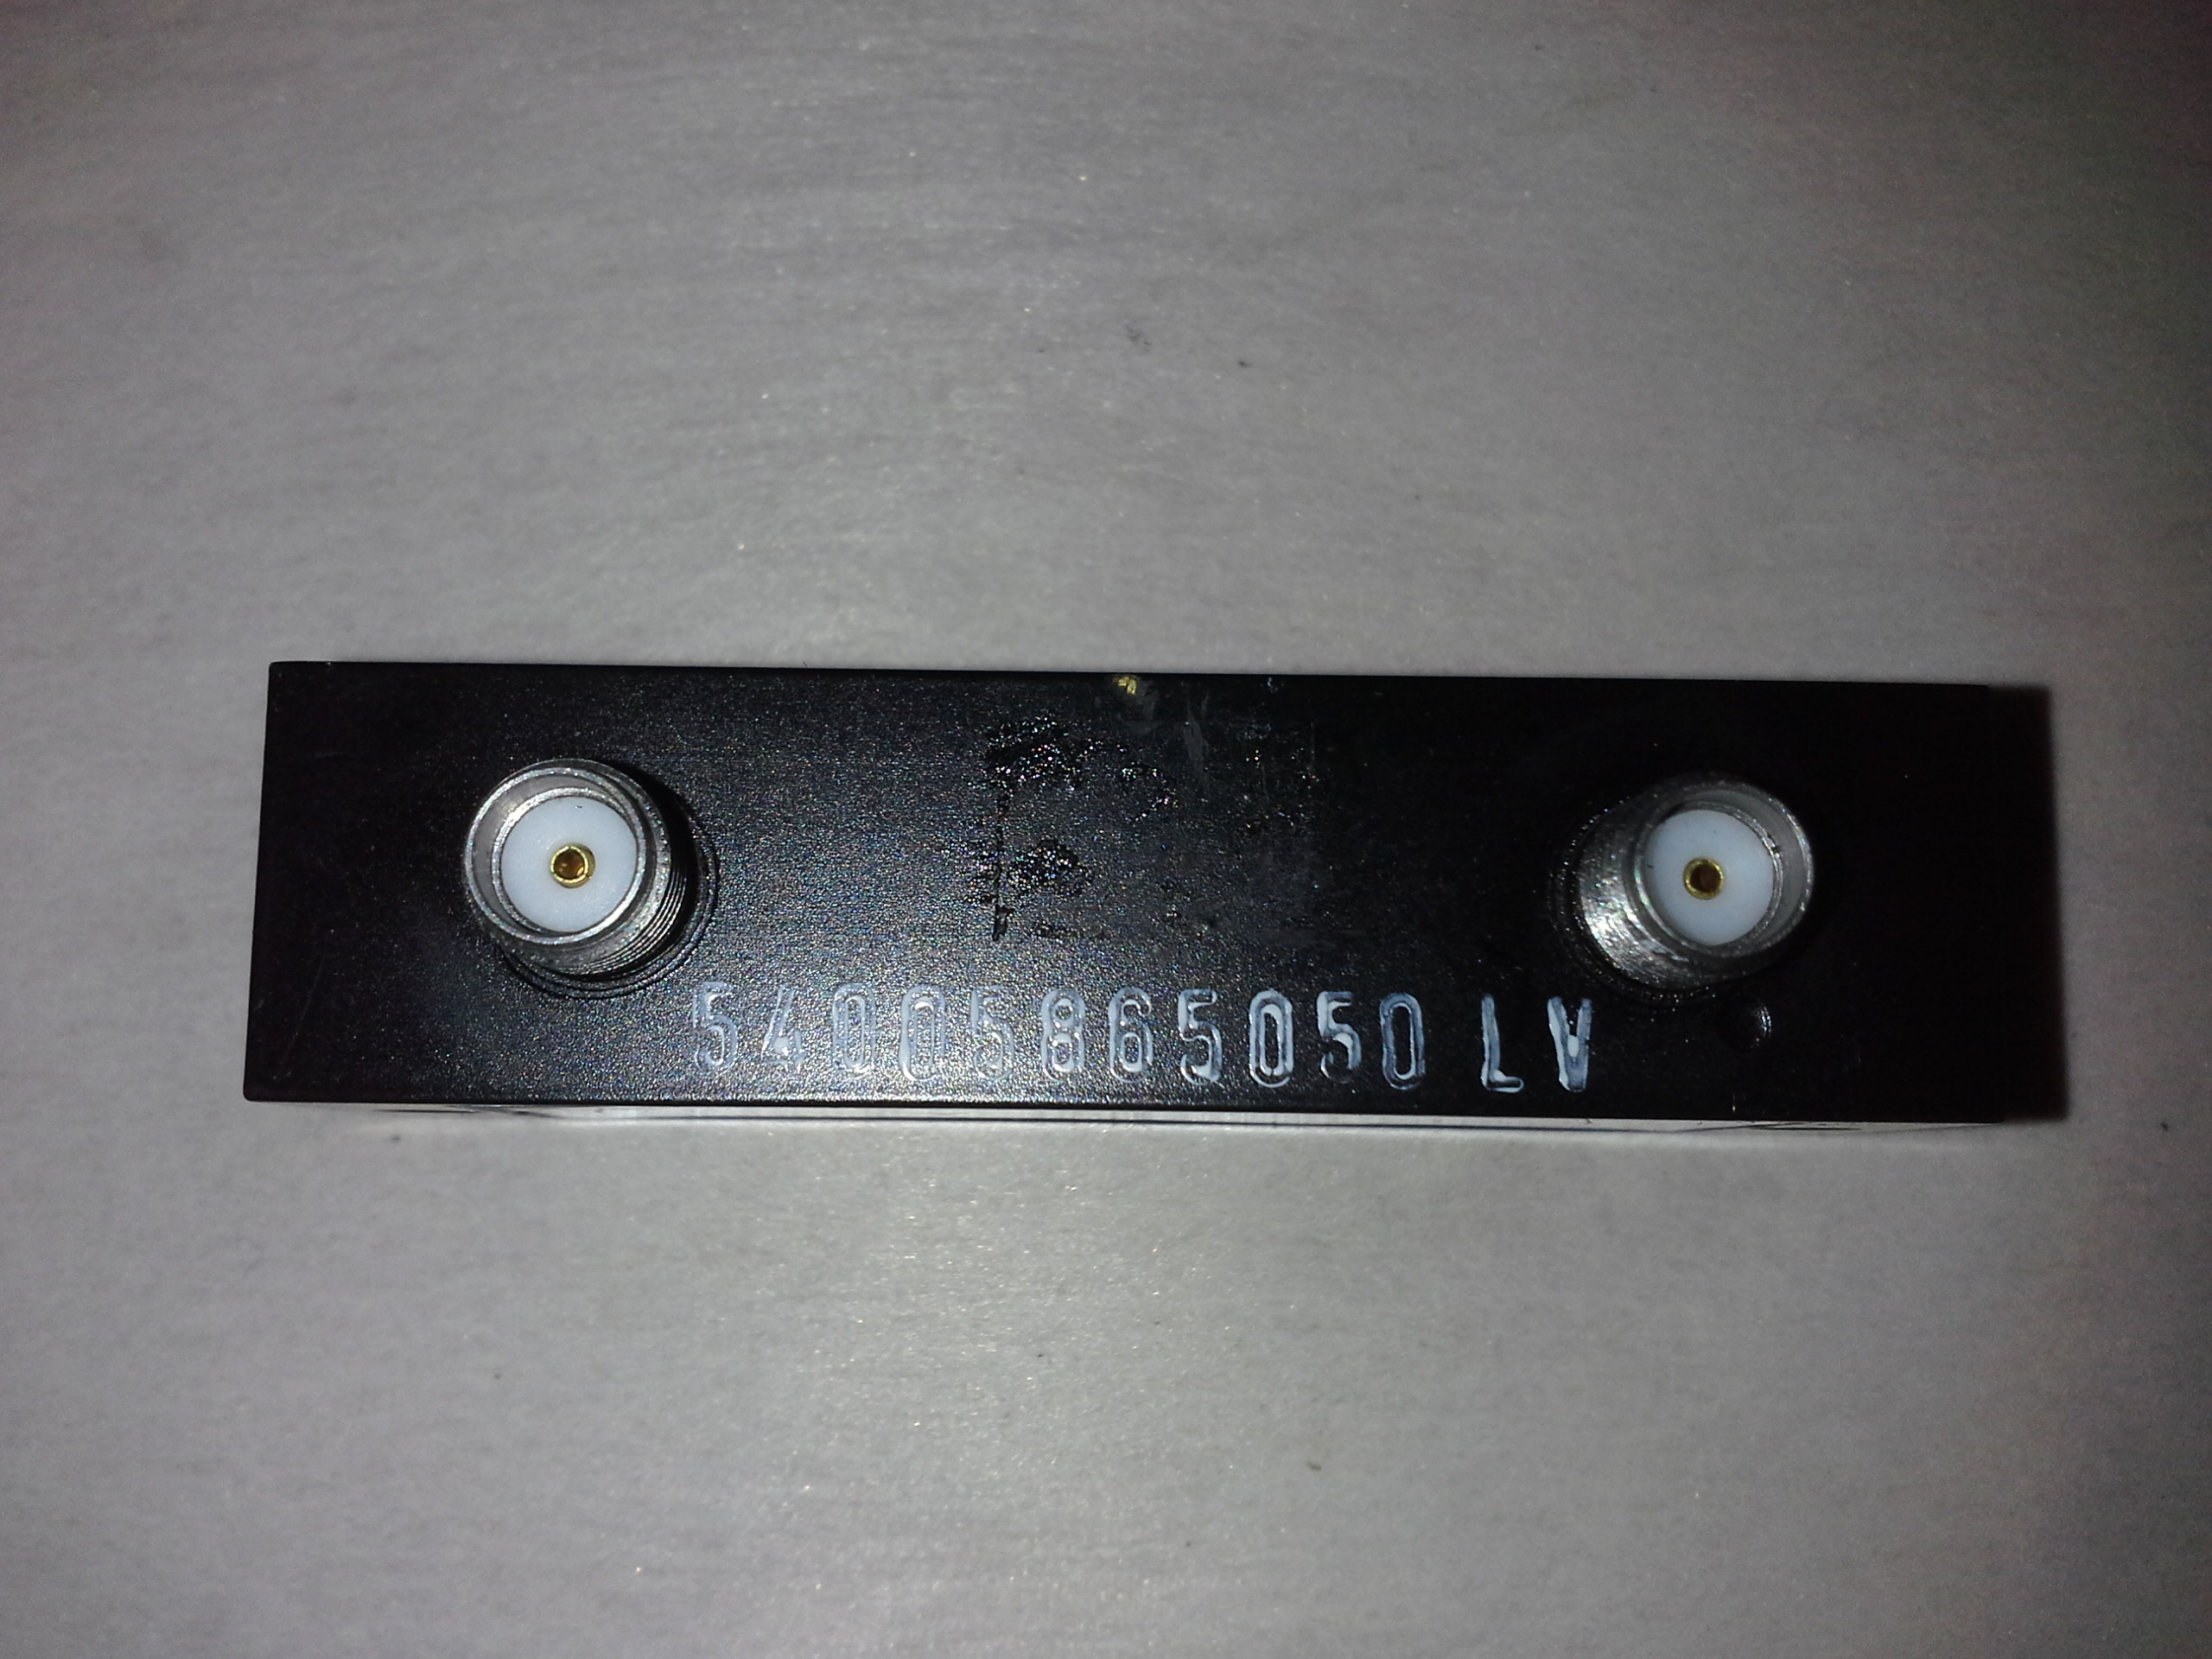 Filtronic SB132-Bandpassfilter 54.0058.650.50LV